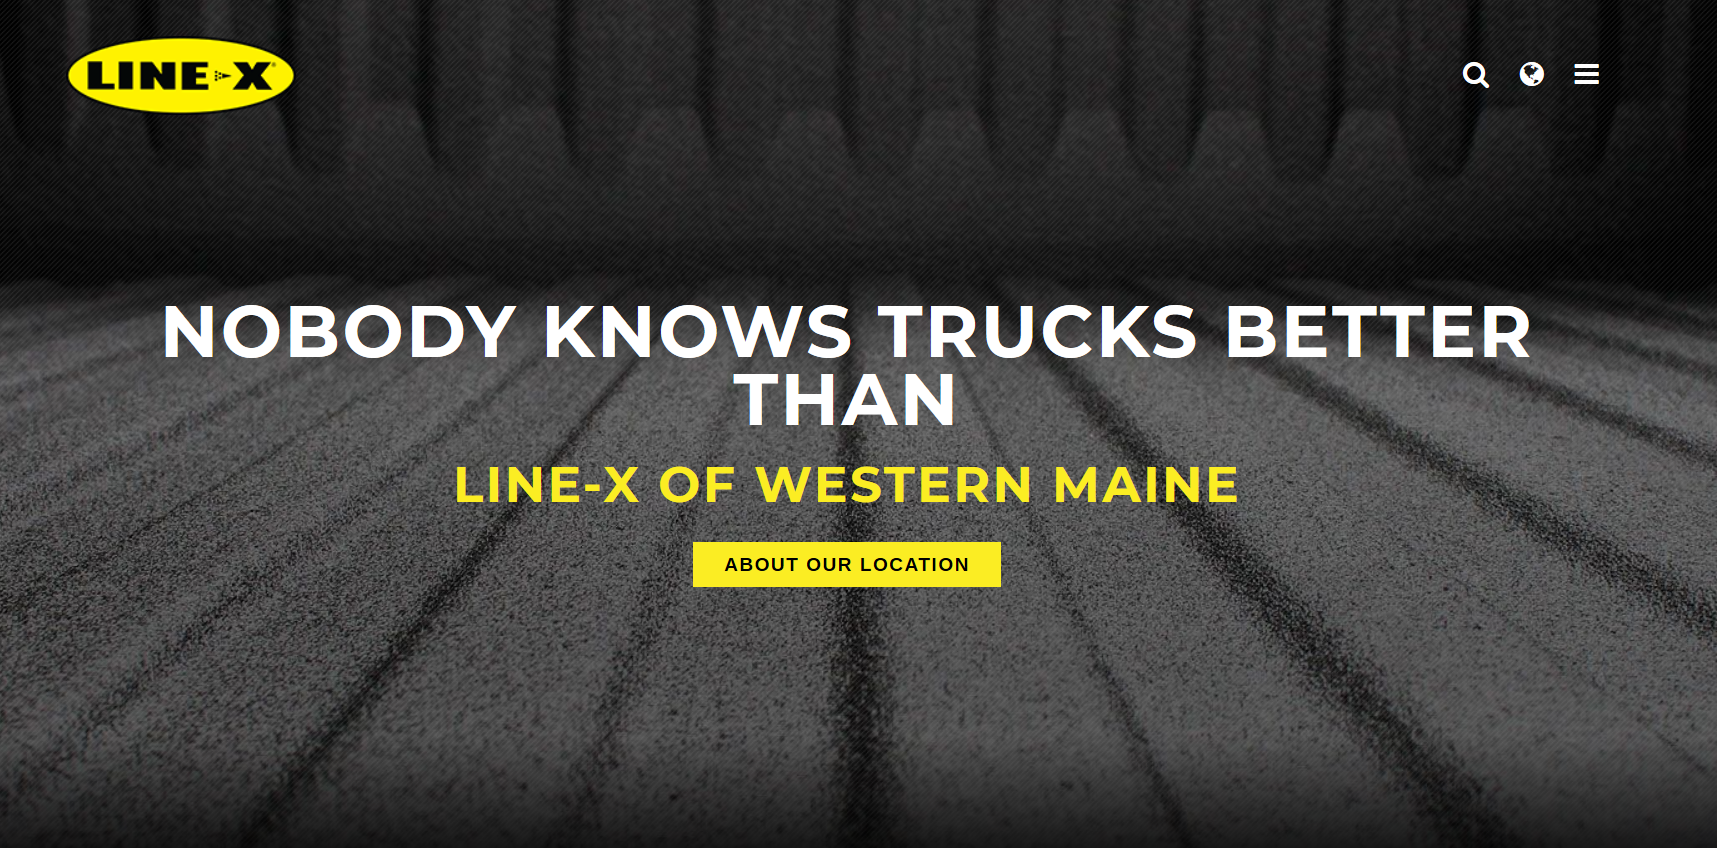 LINE-X of Western Maine